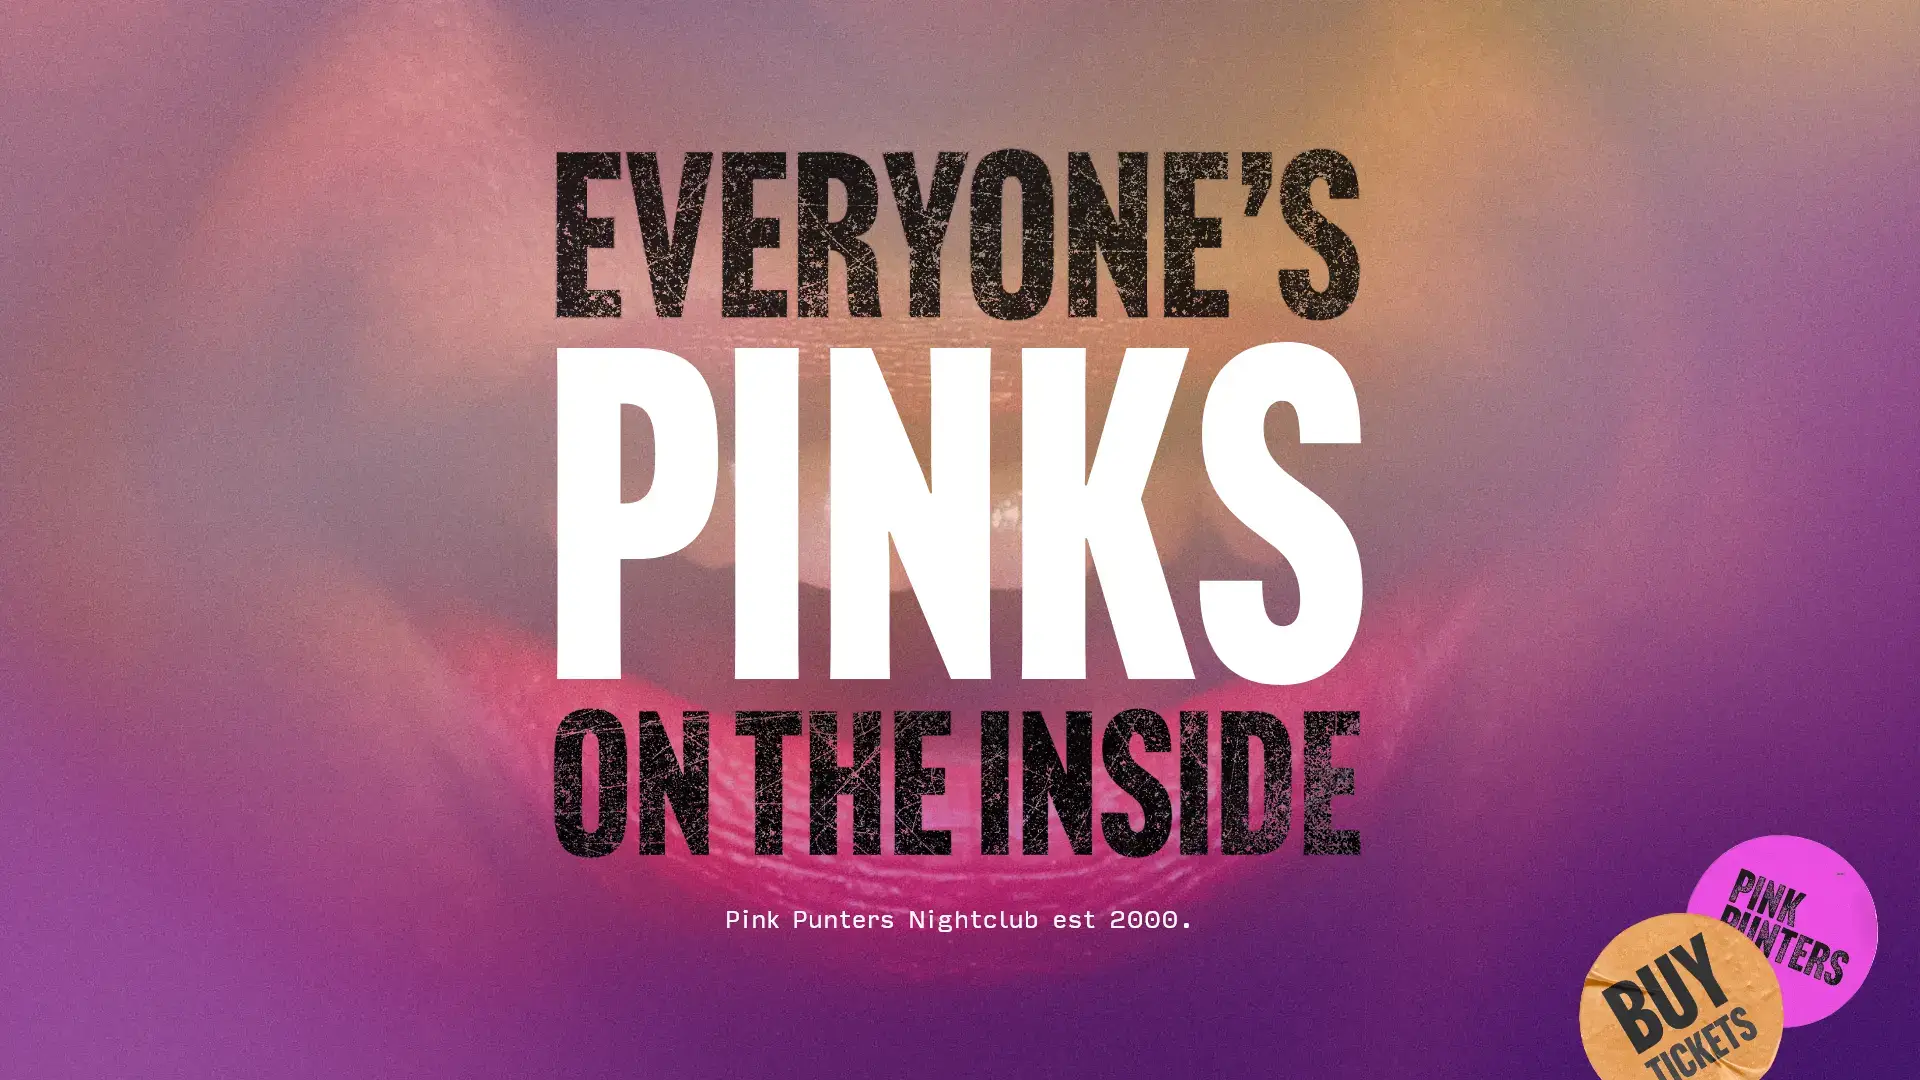 Pink Punters Website